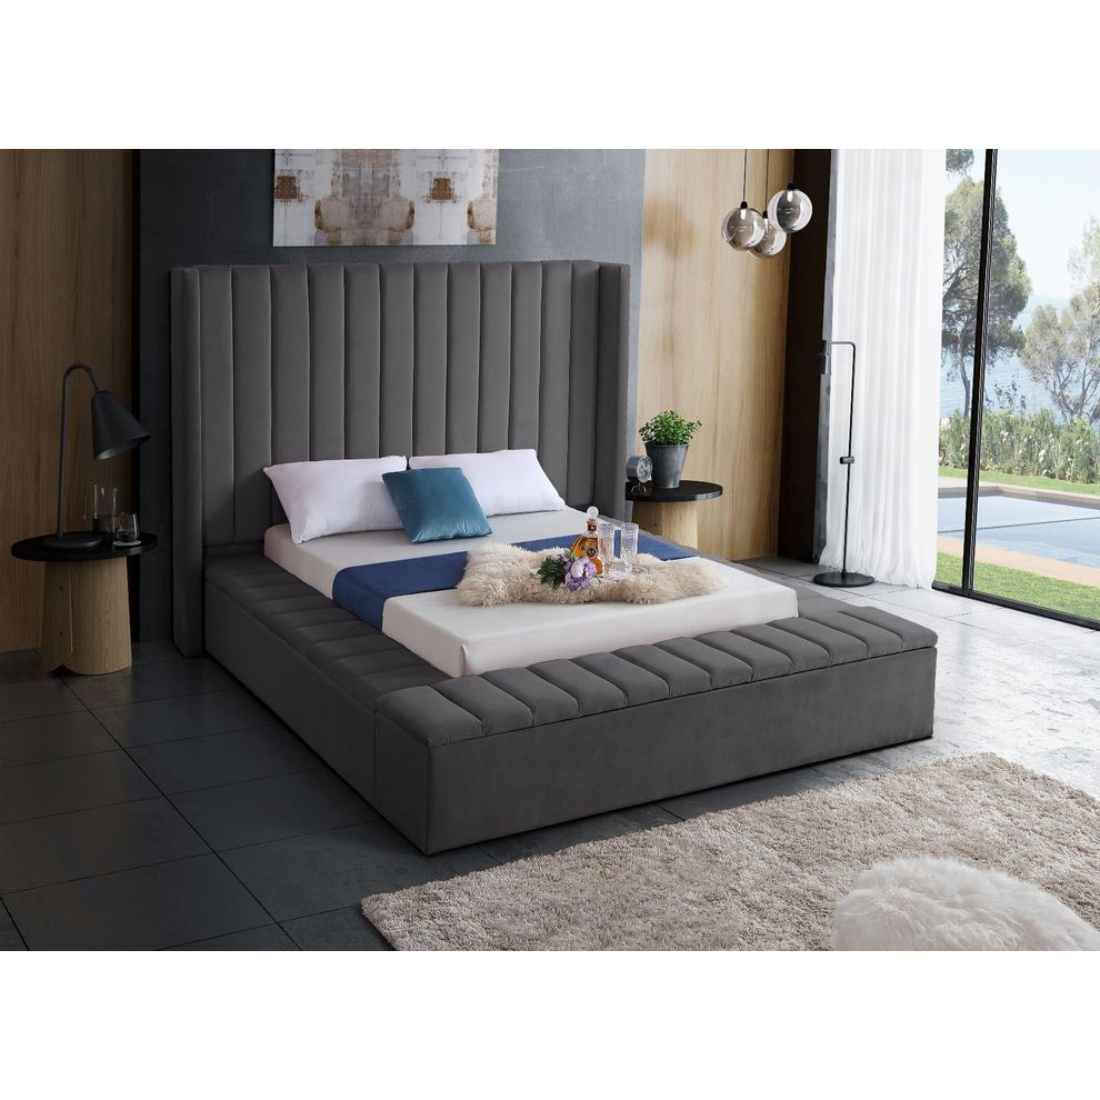 Juniper King Size Upholstered Bed, King Size Upholstered Bed With Storage